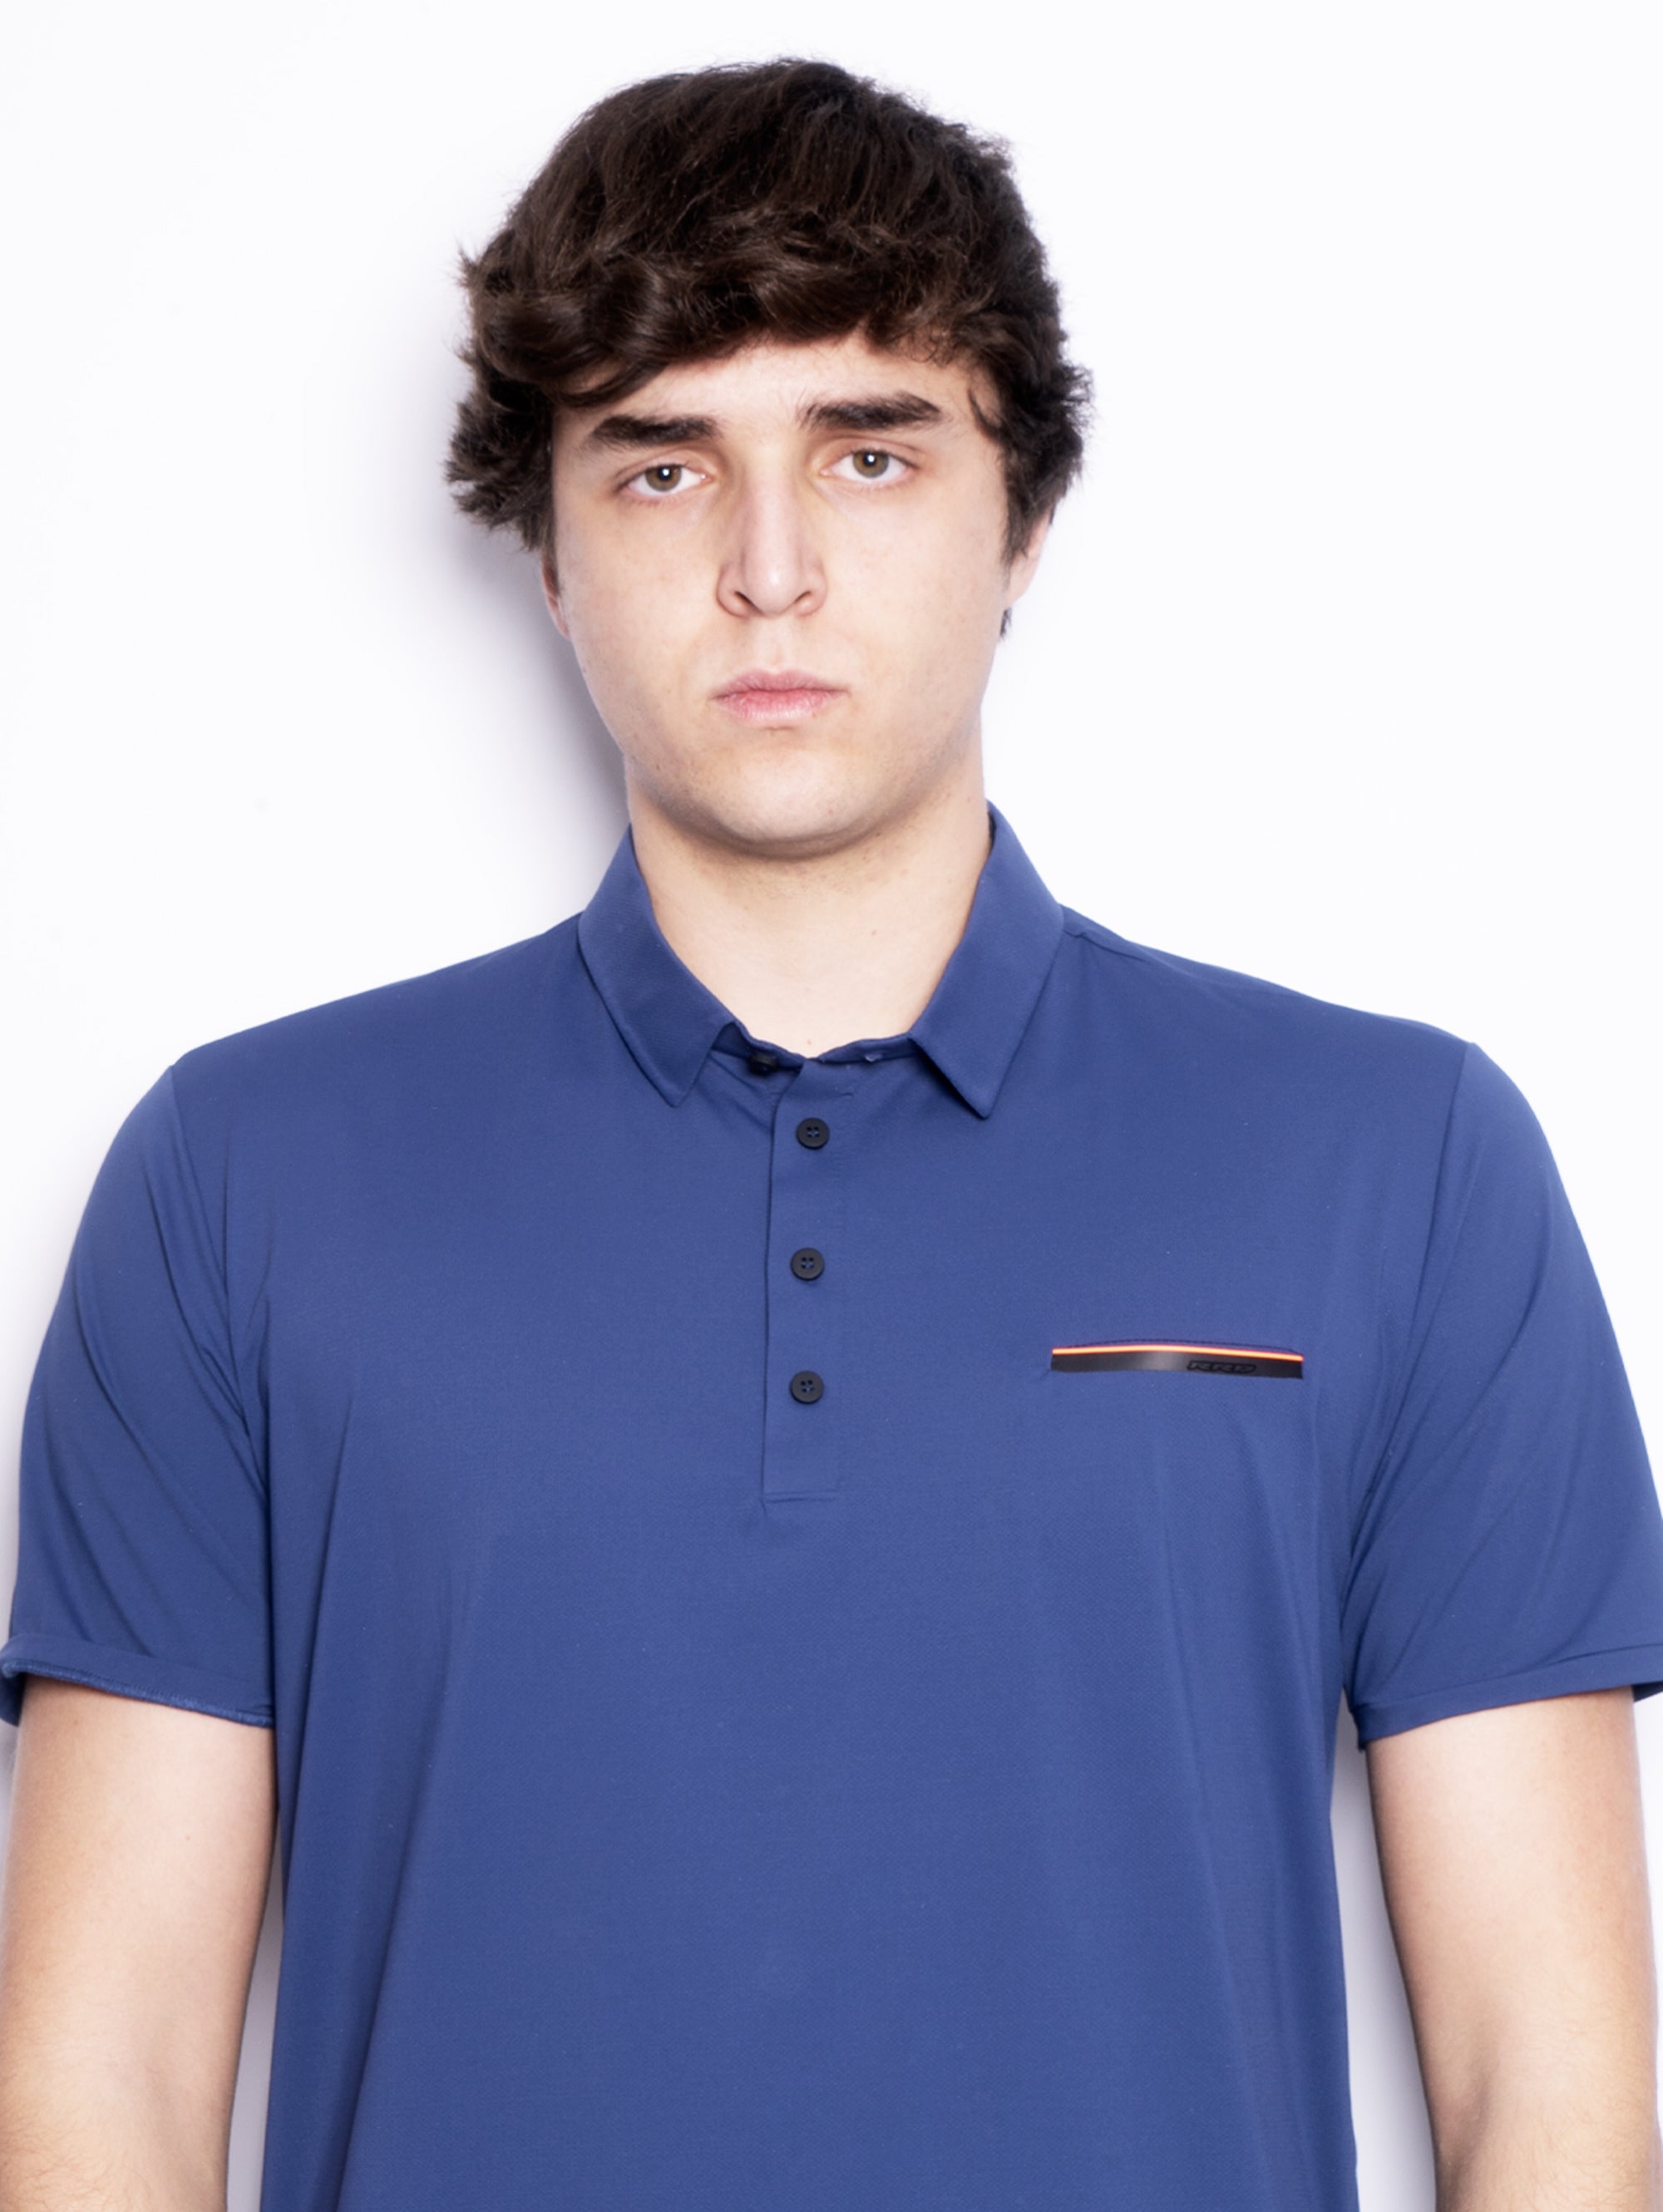 Stretch fabric polo shirt with blue pocket